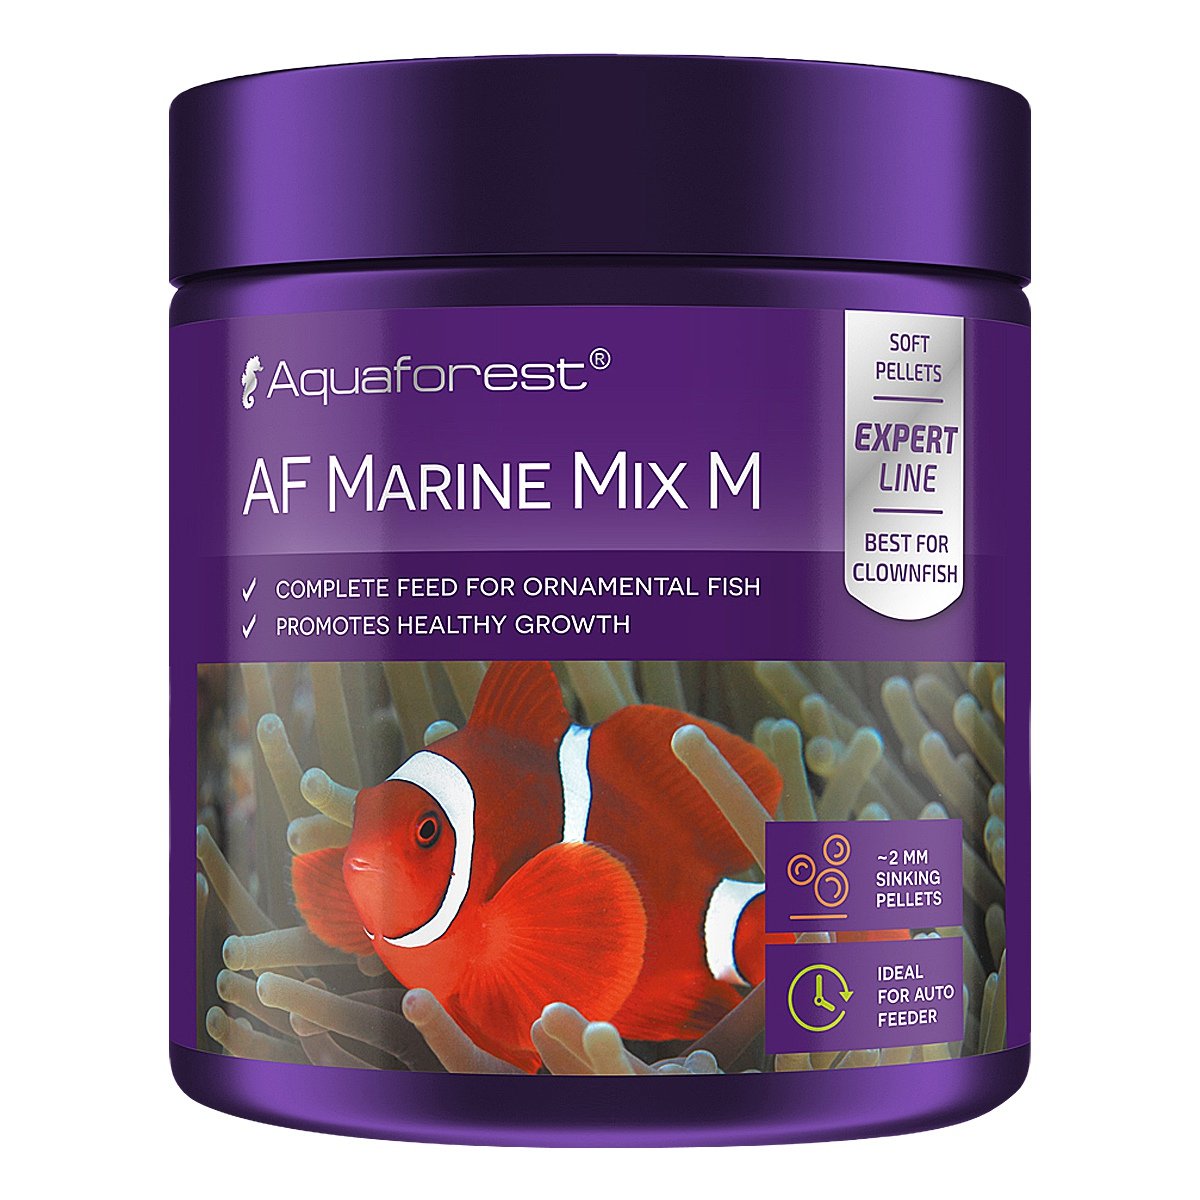 Aquaforest Aquaforest Marine Mix M 120g AF MARINE MIX M